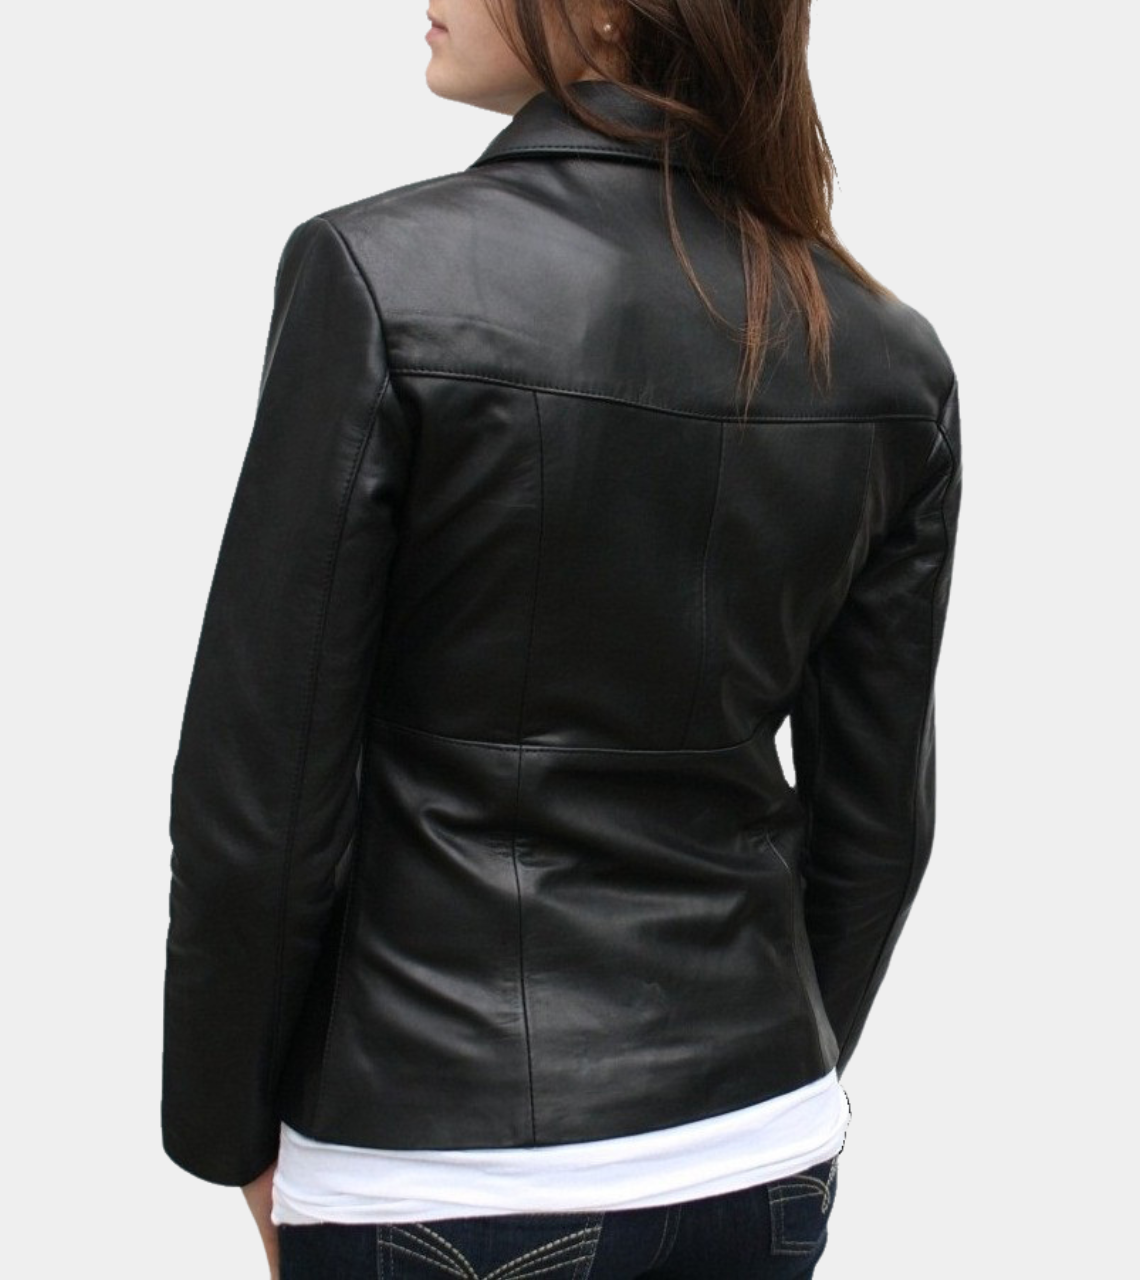  Black Women's Leather Jacket